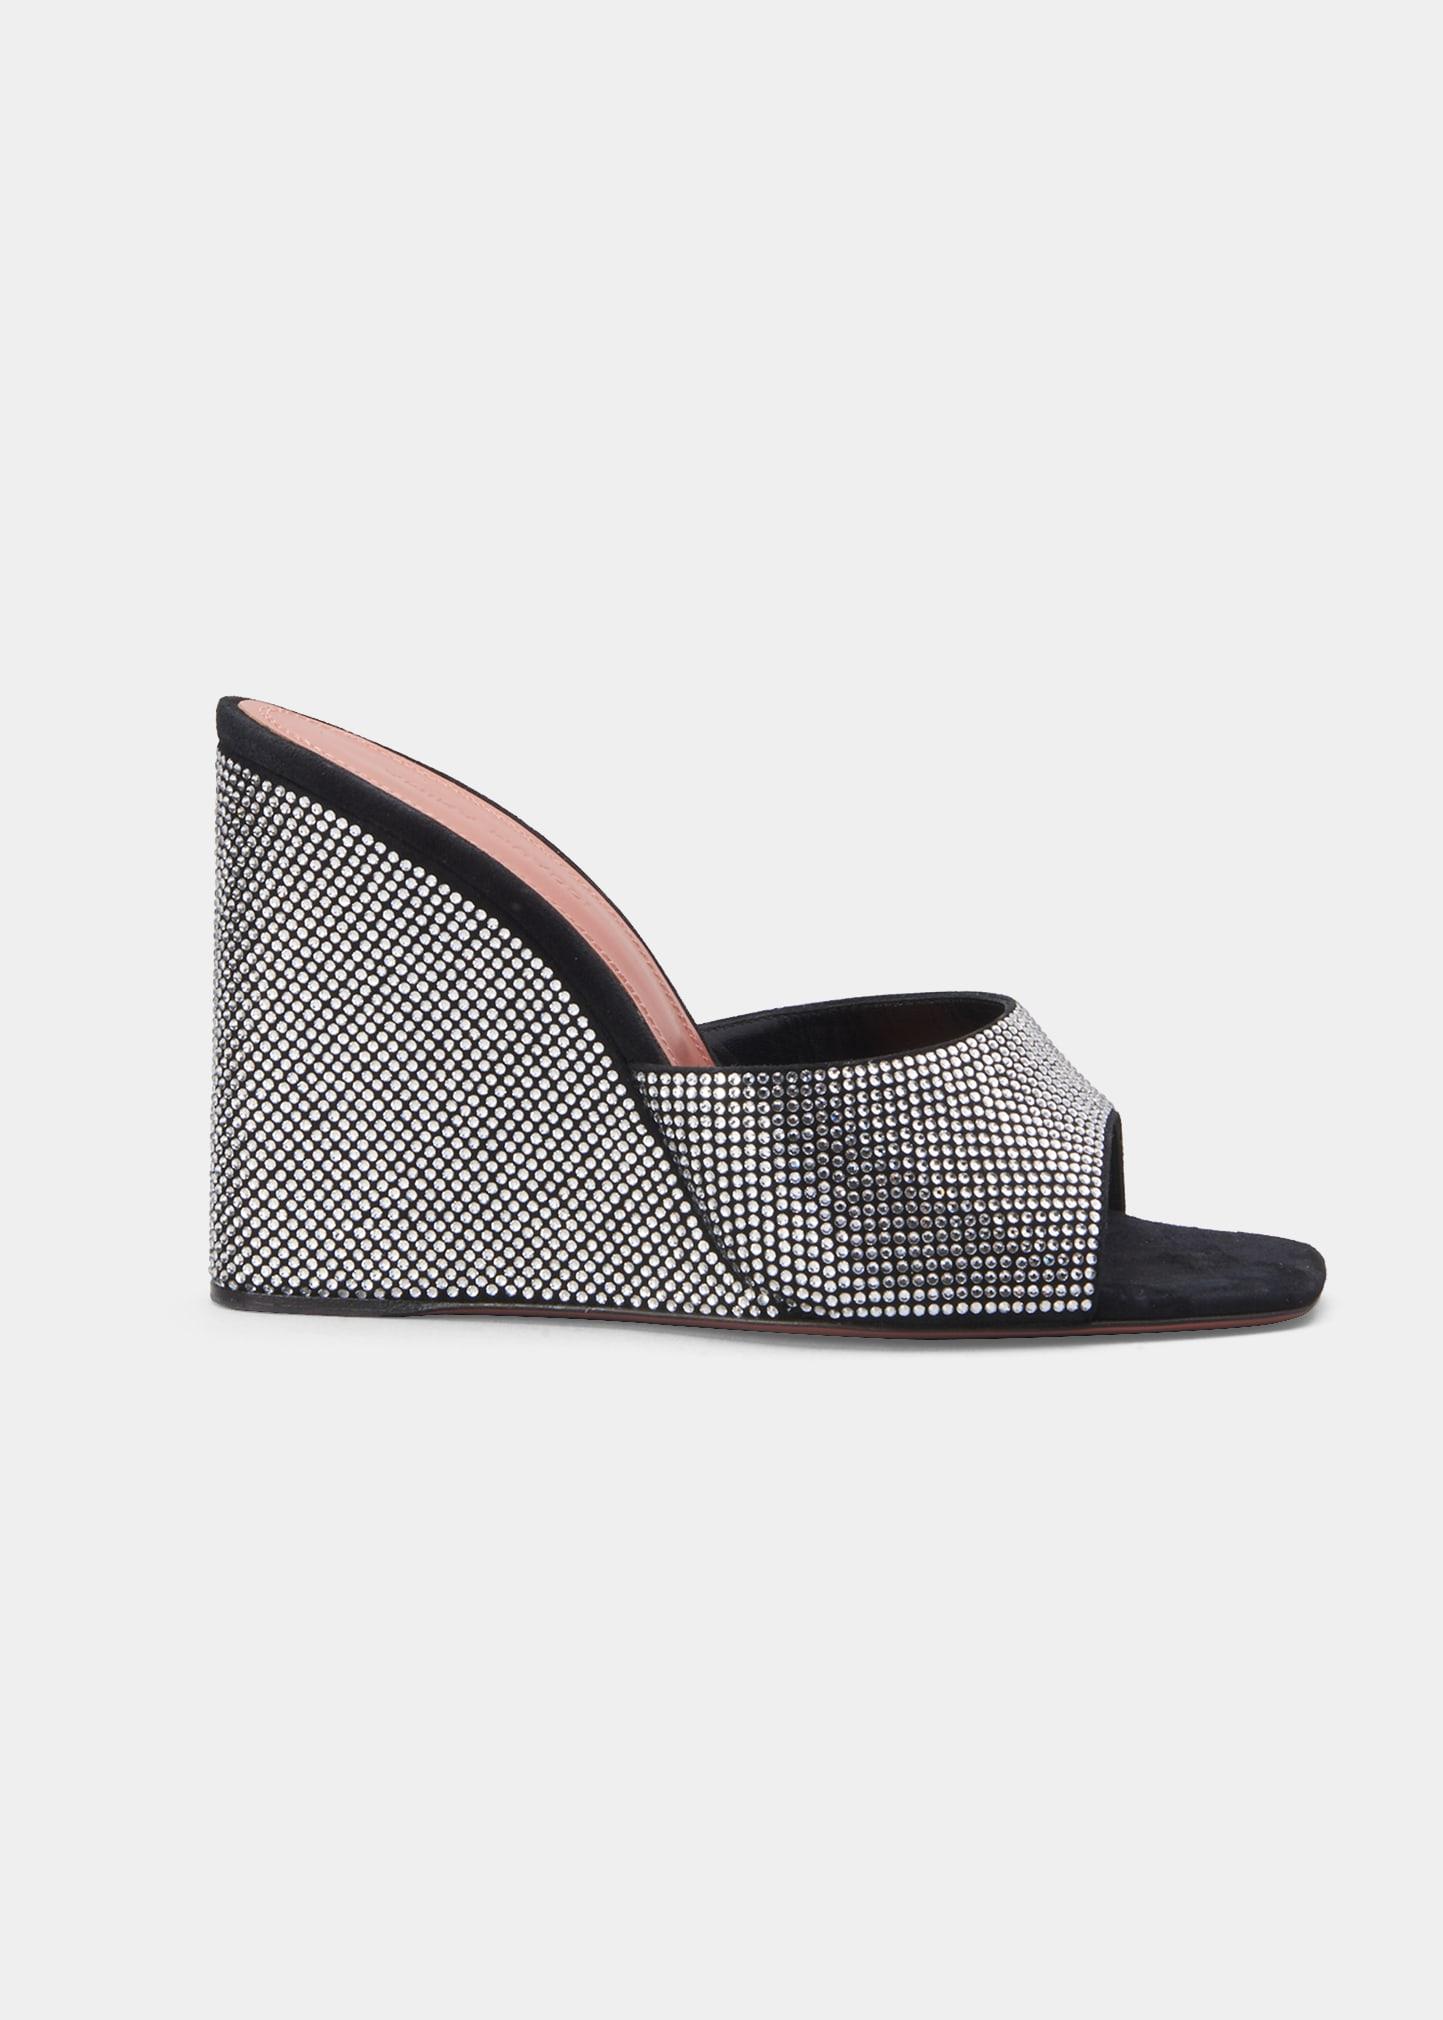 AMINA MUADDI Lupita Crystal Wedge Slide Sandals in Gray | Lyst